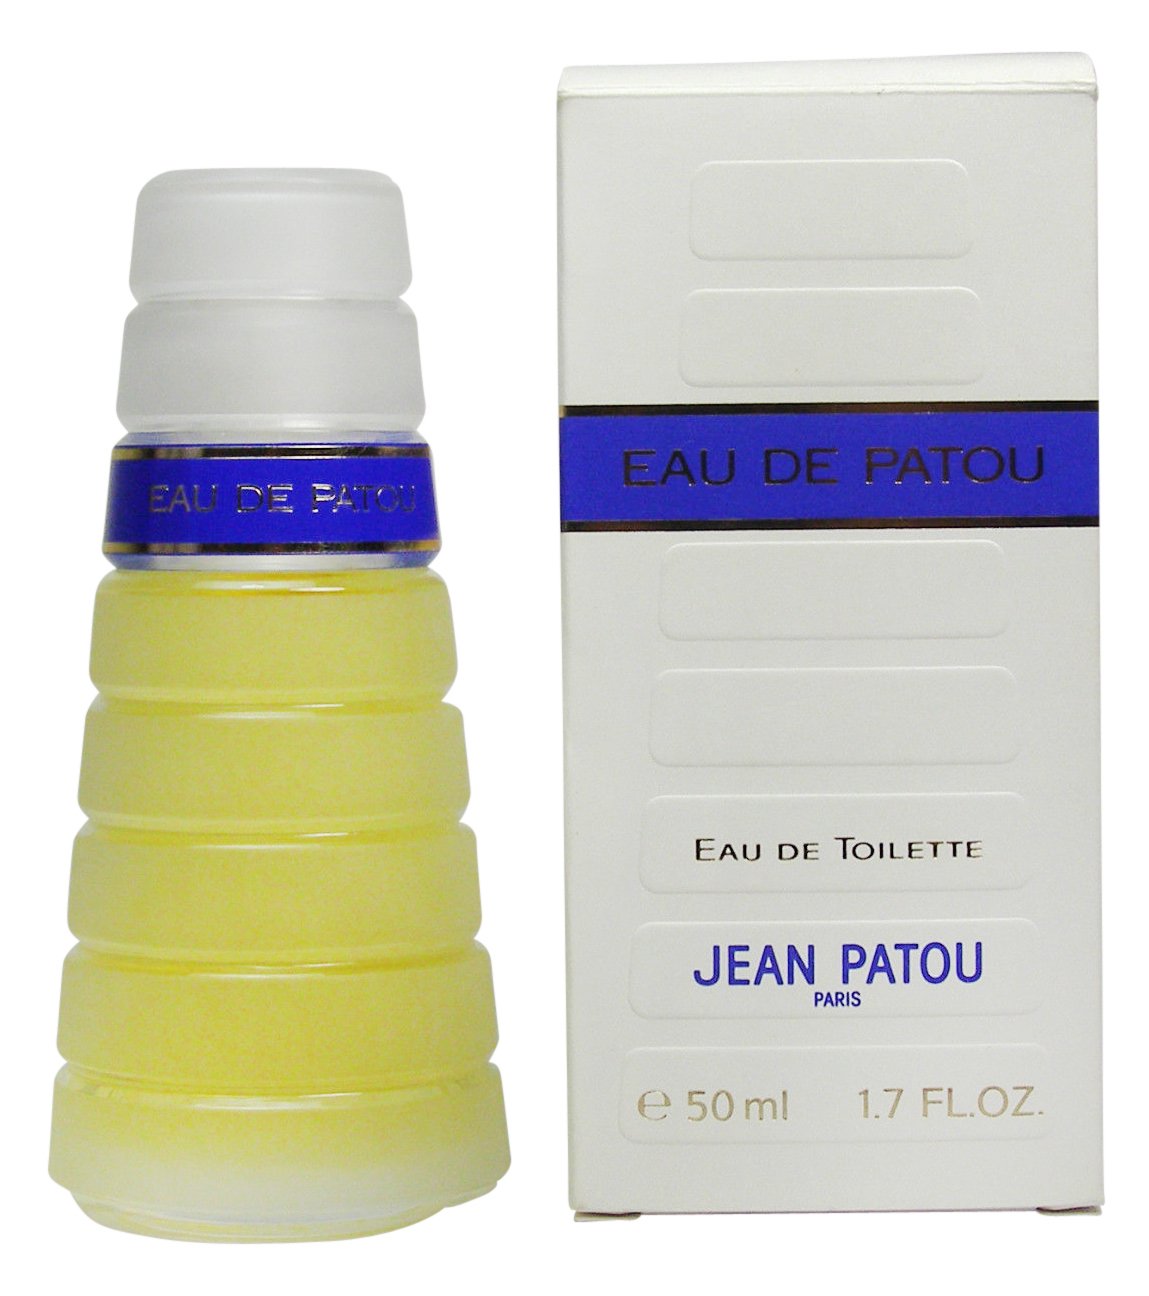 Jean Patou - Eau de Patou | Reviews and 